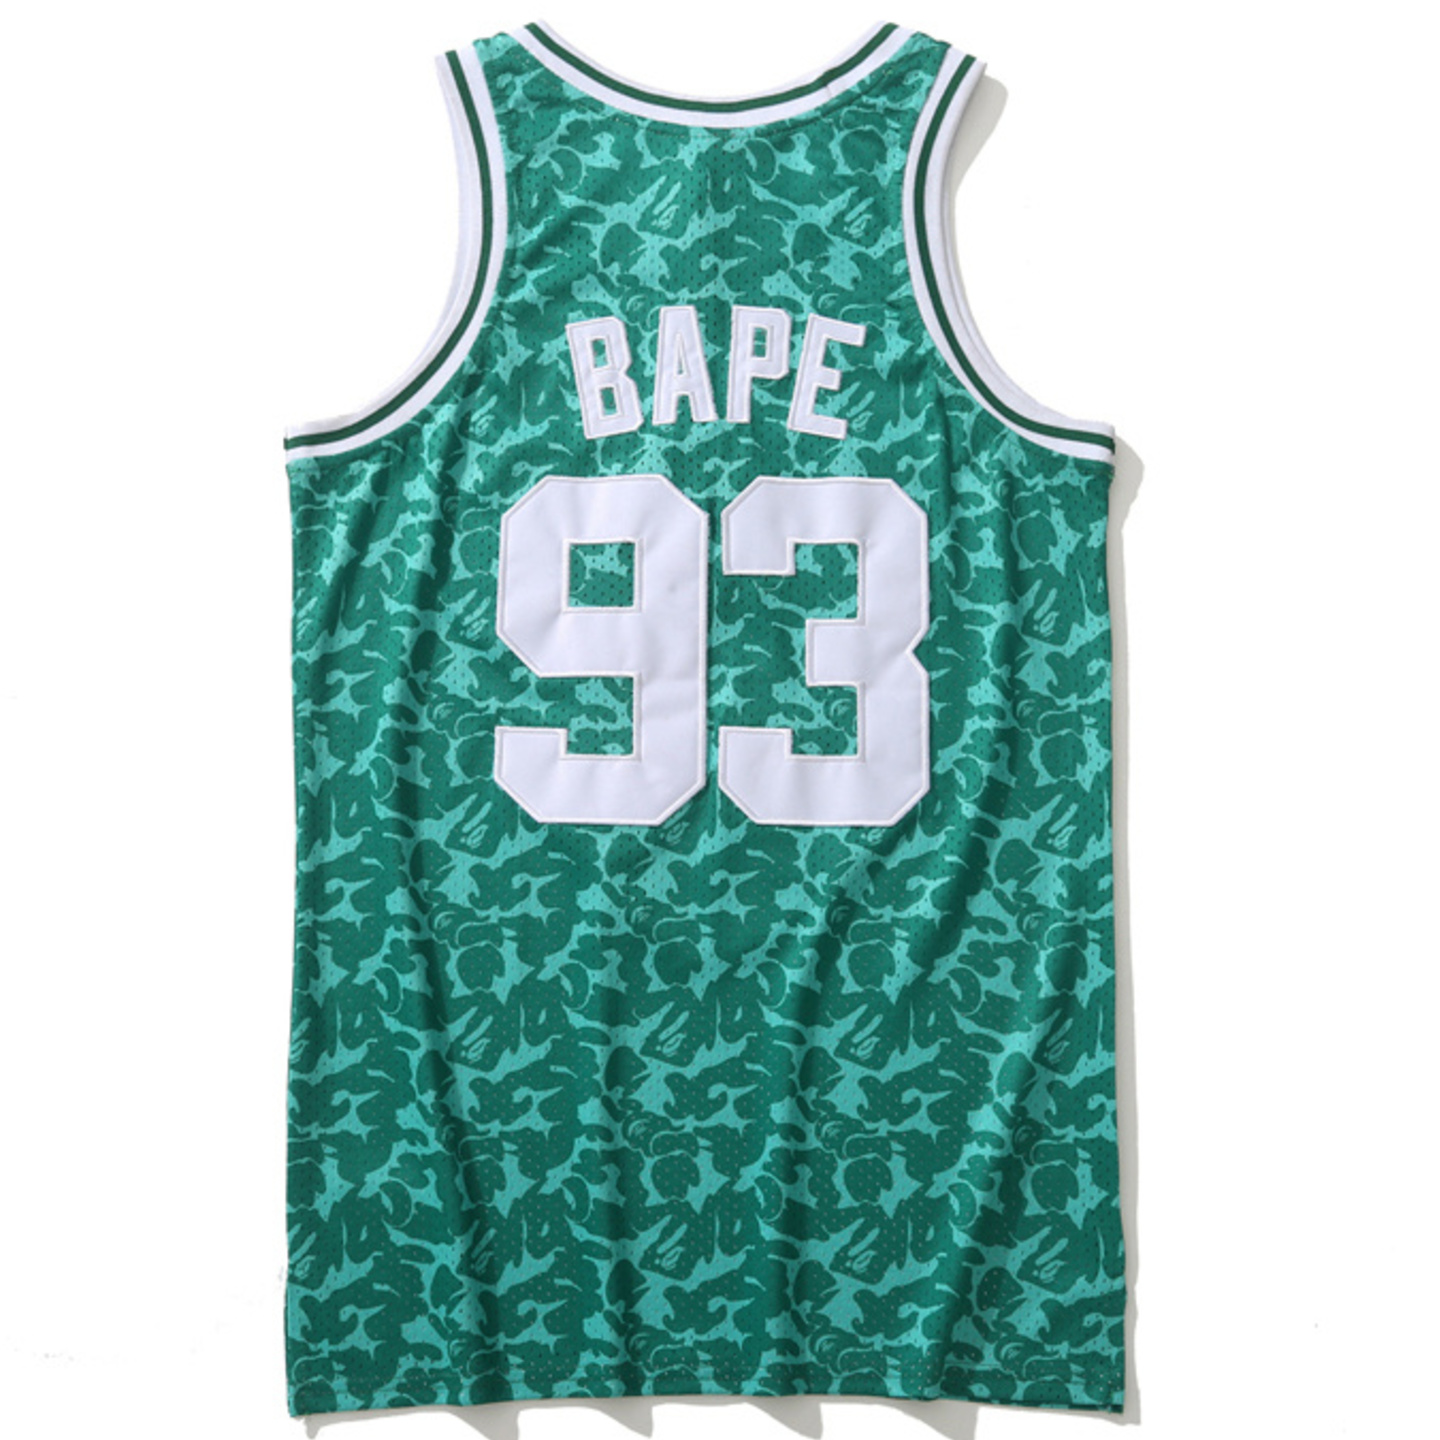 Boston Celtics BAPE 93 NBA Jersey